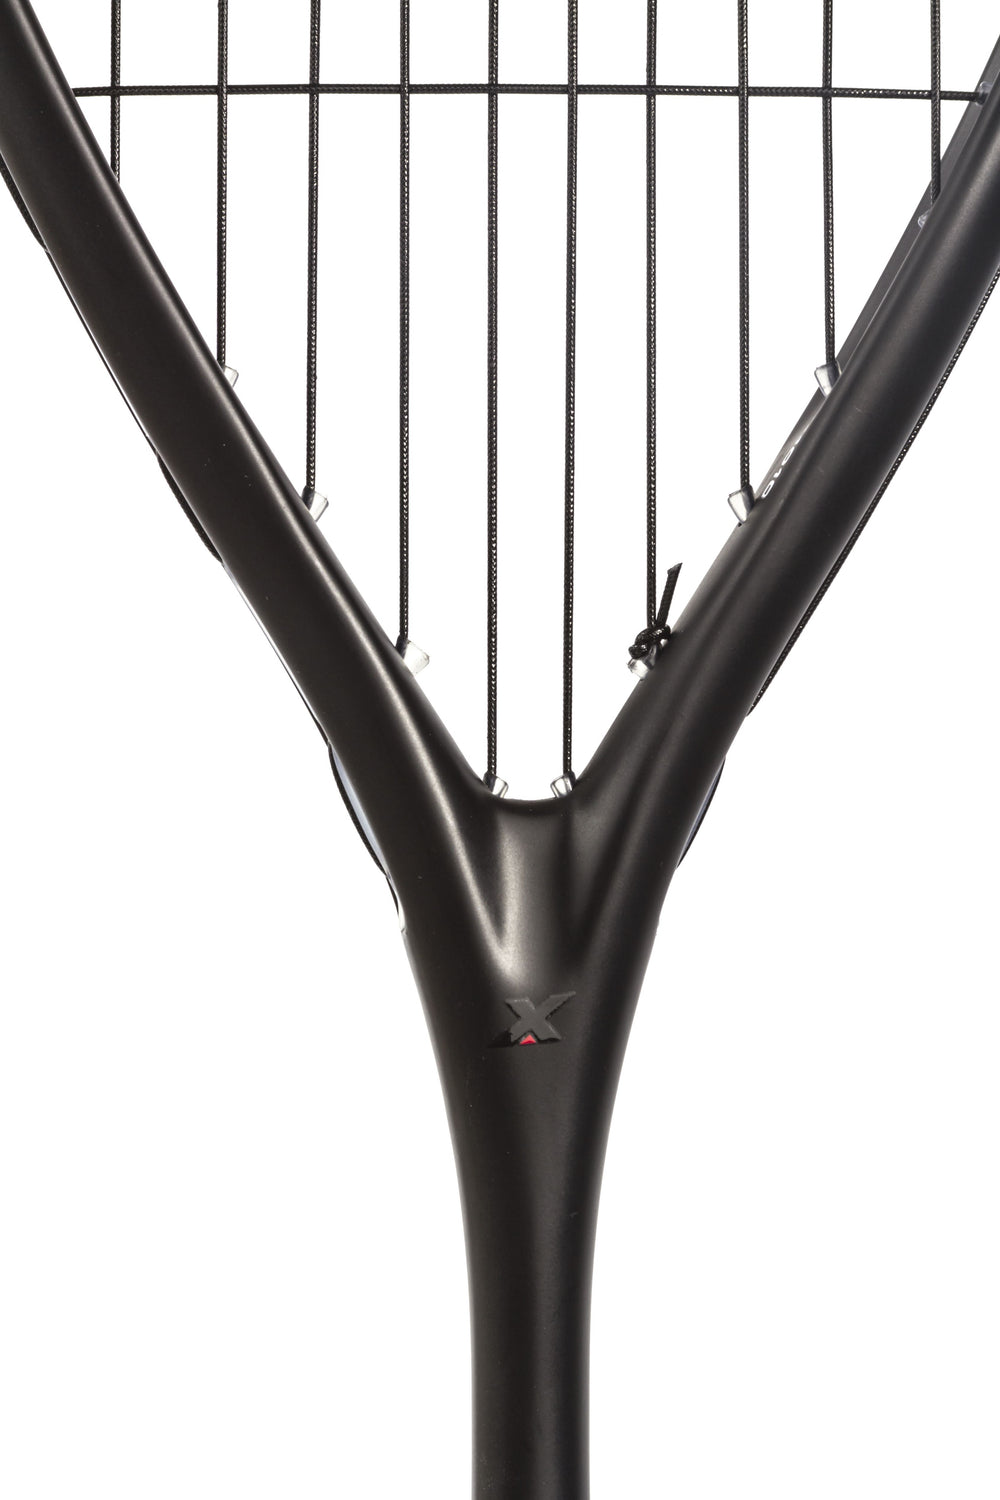 Xamsa PXT Incognito 2017 Squash Racquet Squash Racquets Xamsa 